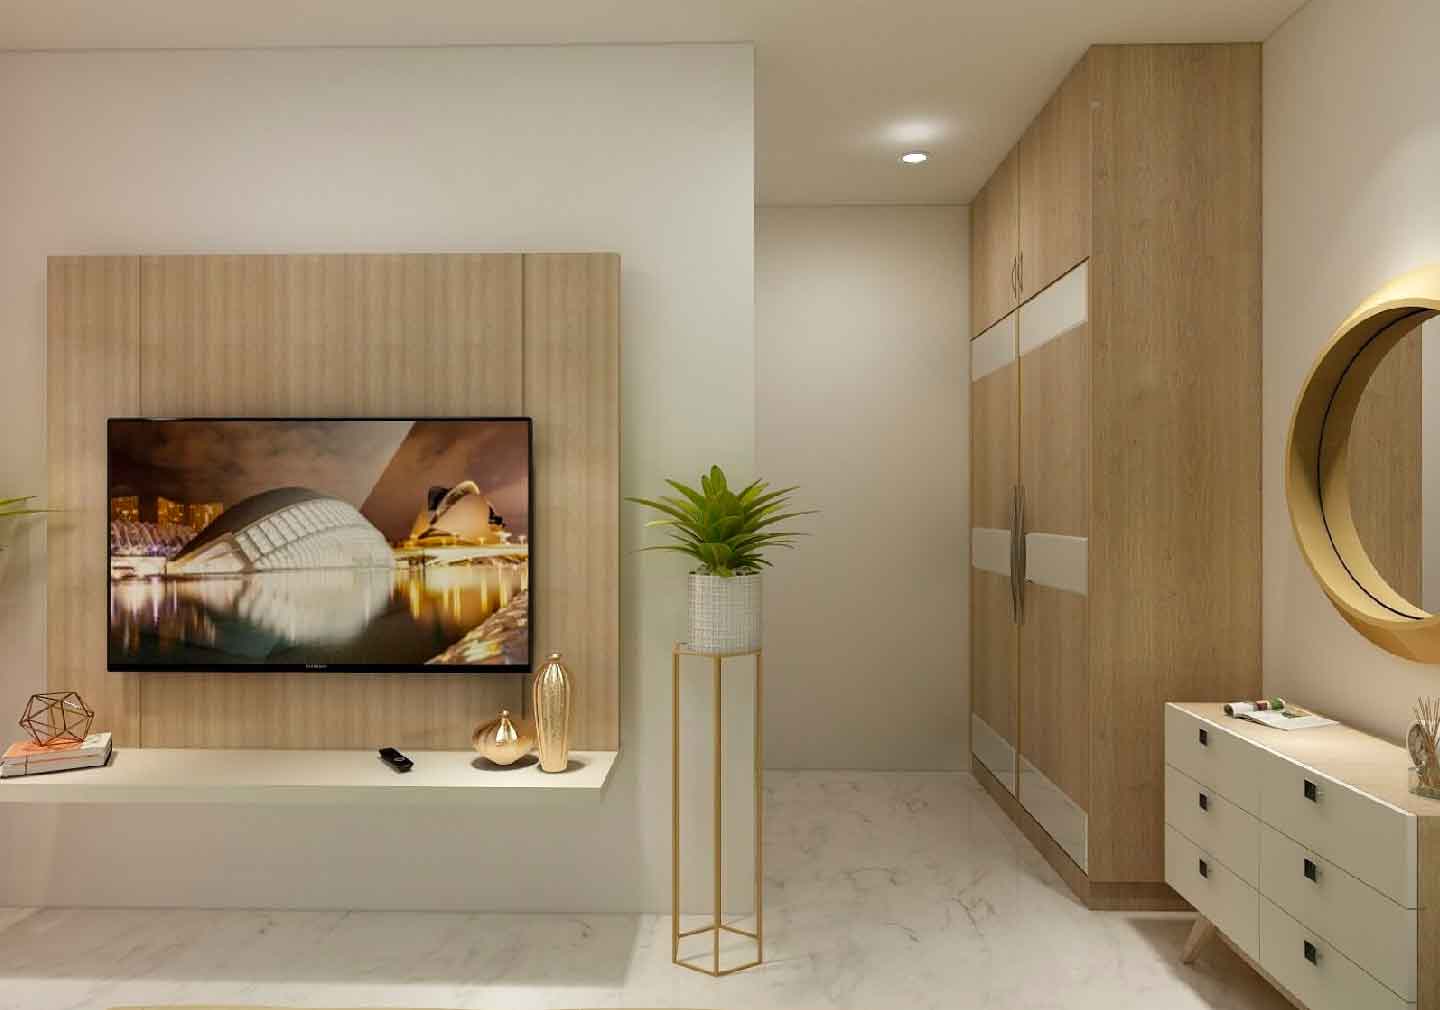 Living Room Interior Design Ideas